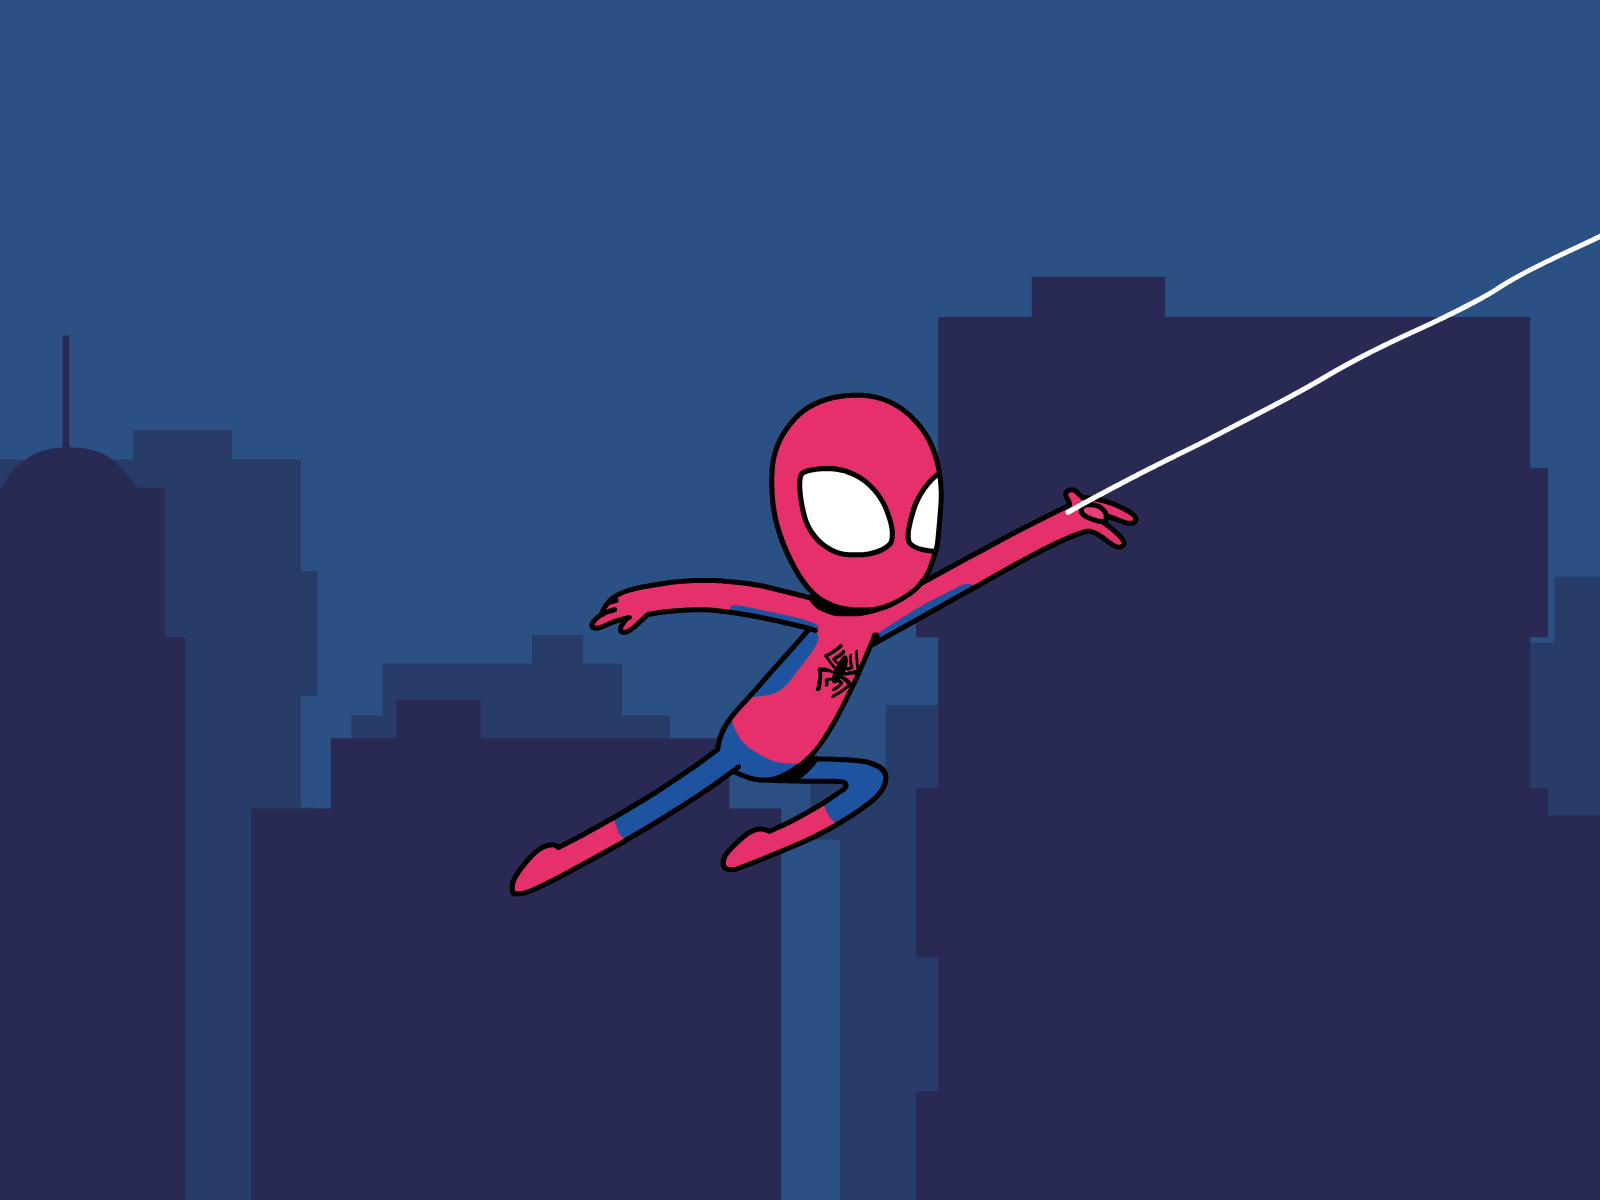 Spider Man by Eduardo Silva on Dribbble